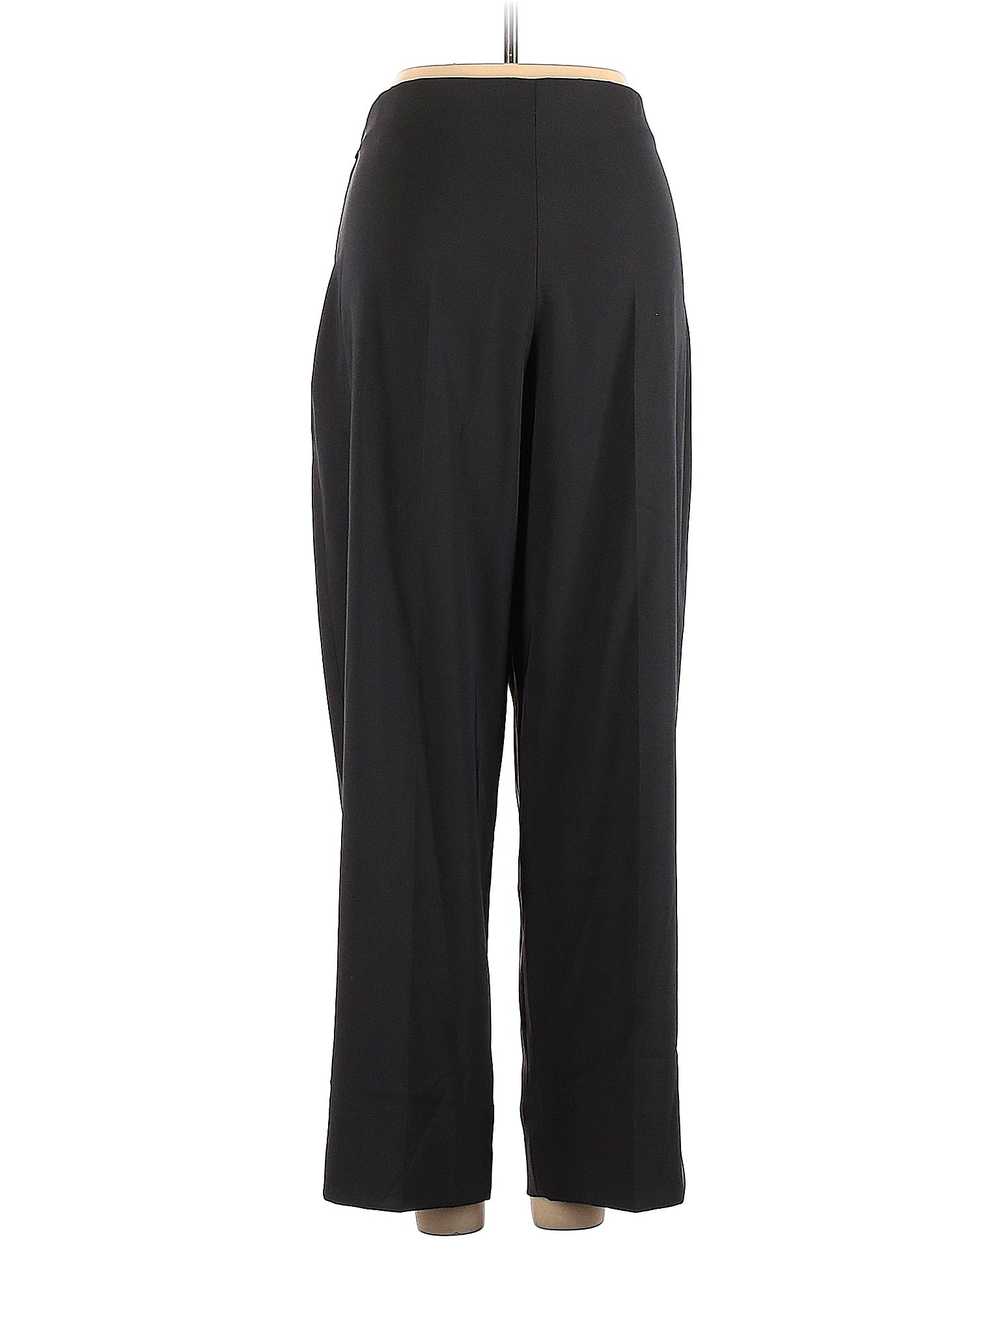 Lauren Vidal Women Black Casual Pants 5 Tall - image 2